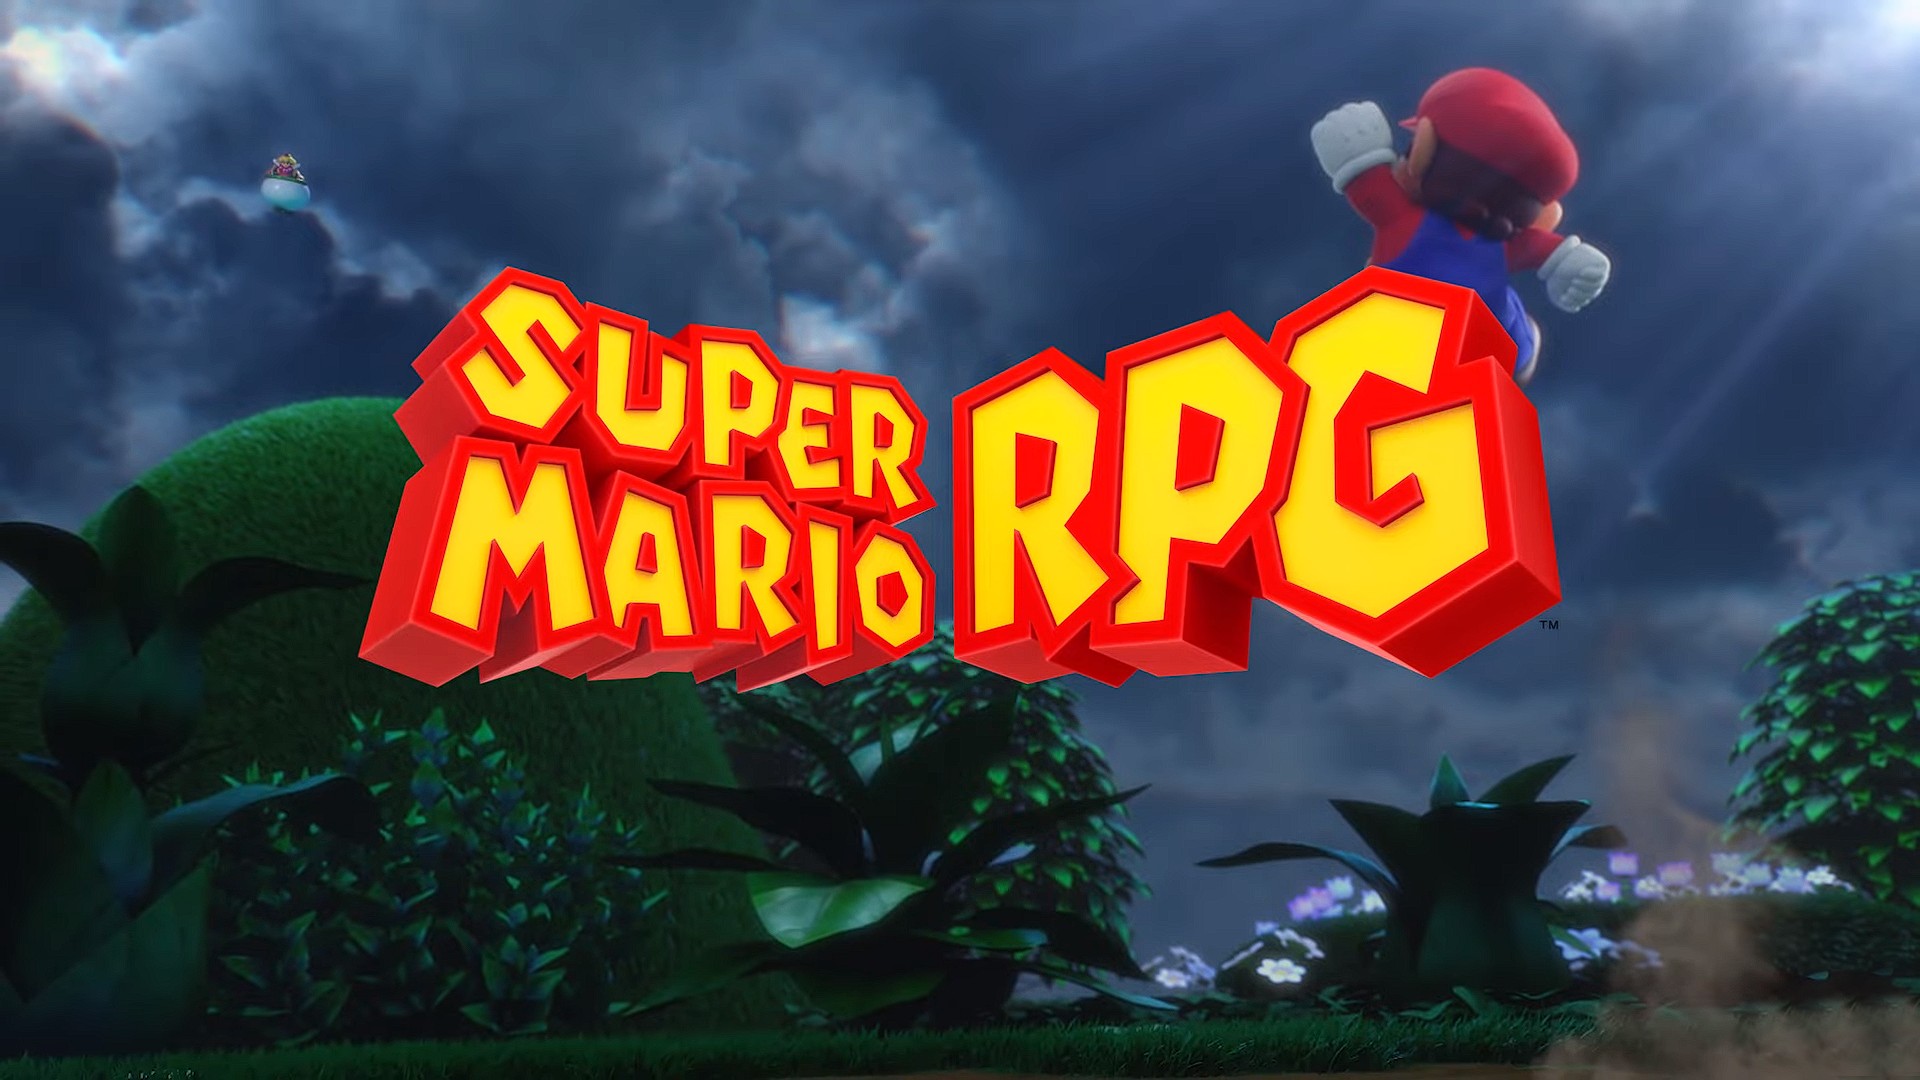 Super Mario RPG (remake): confira o review